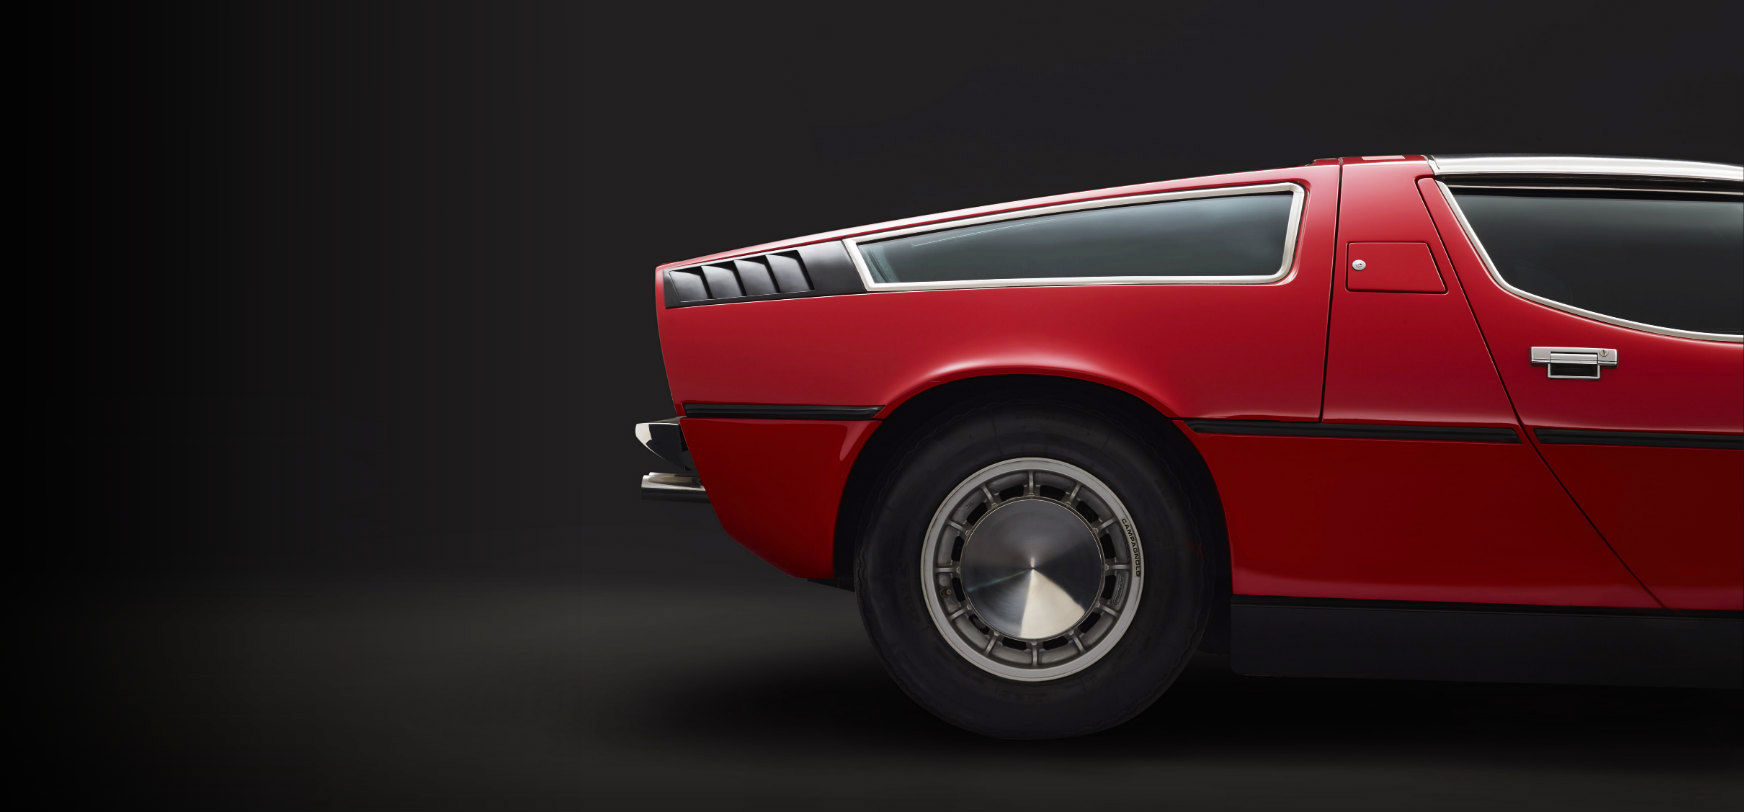 Maserati Classic Cars - classic red Maserati model